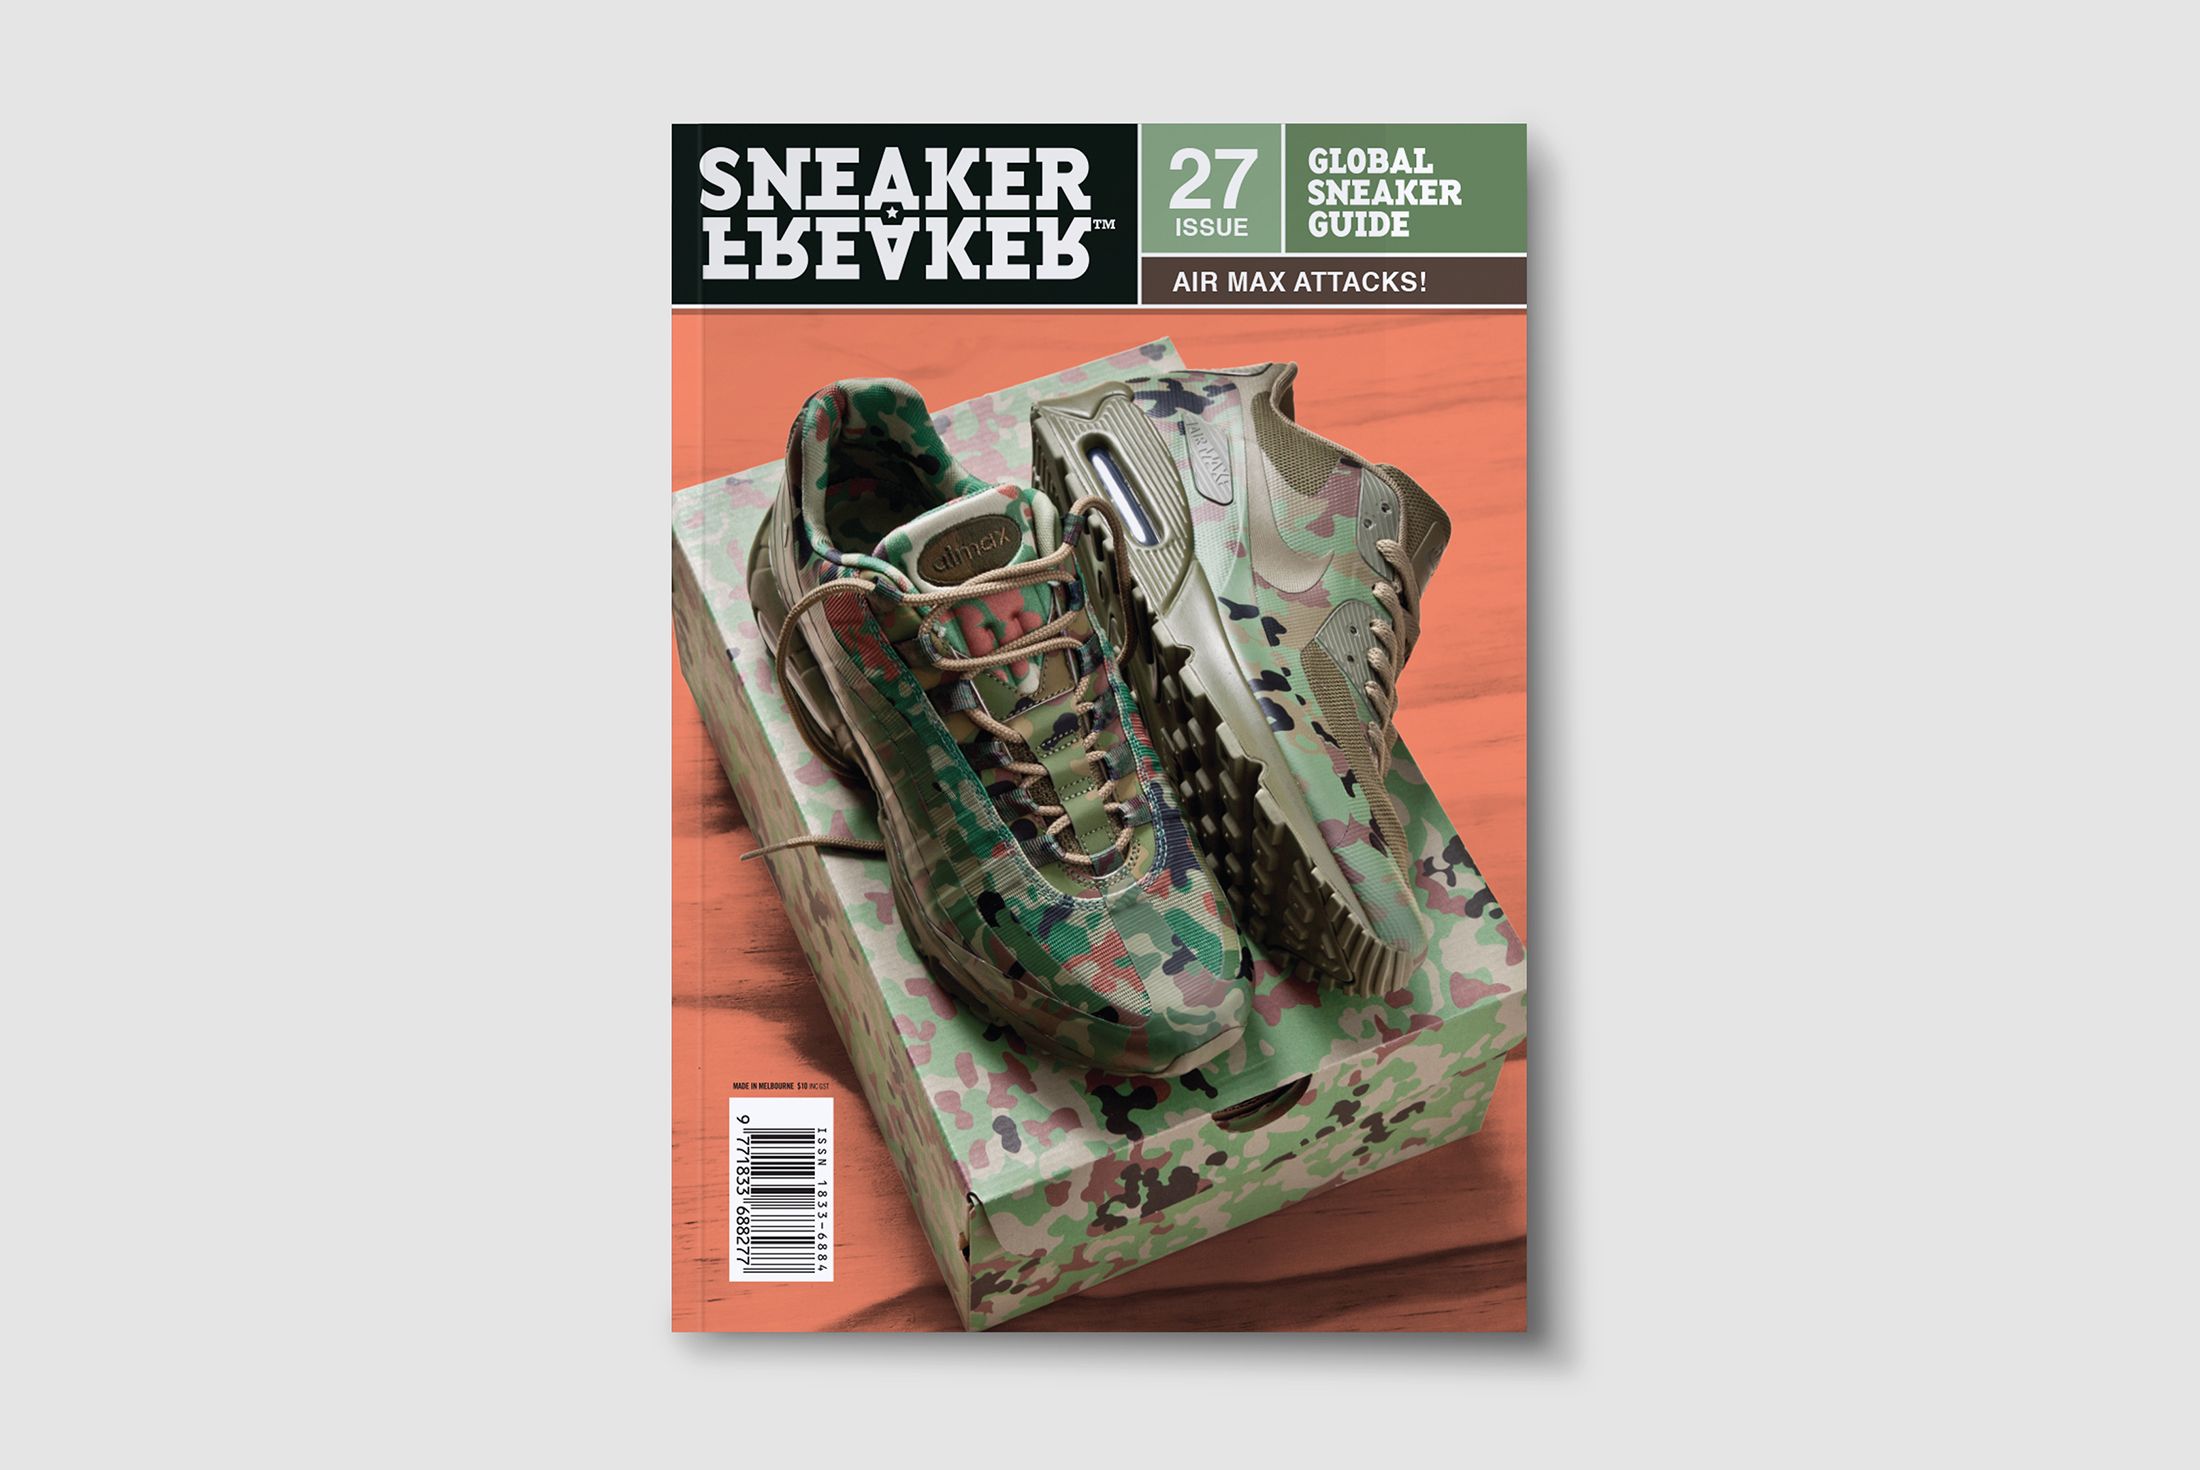 Sneaker Freaker Issue 21-30